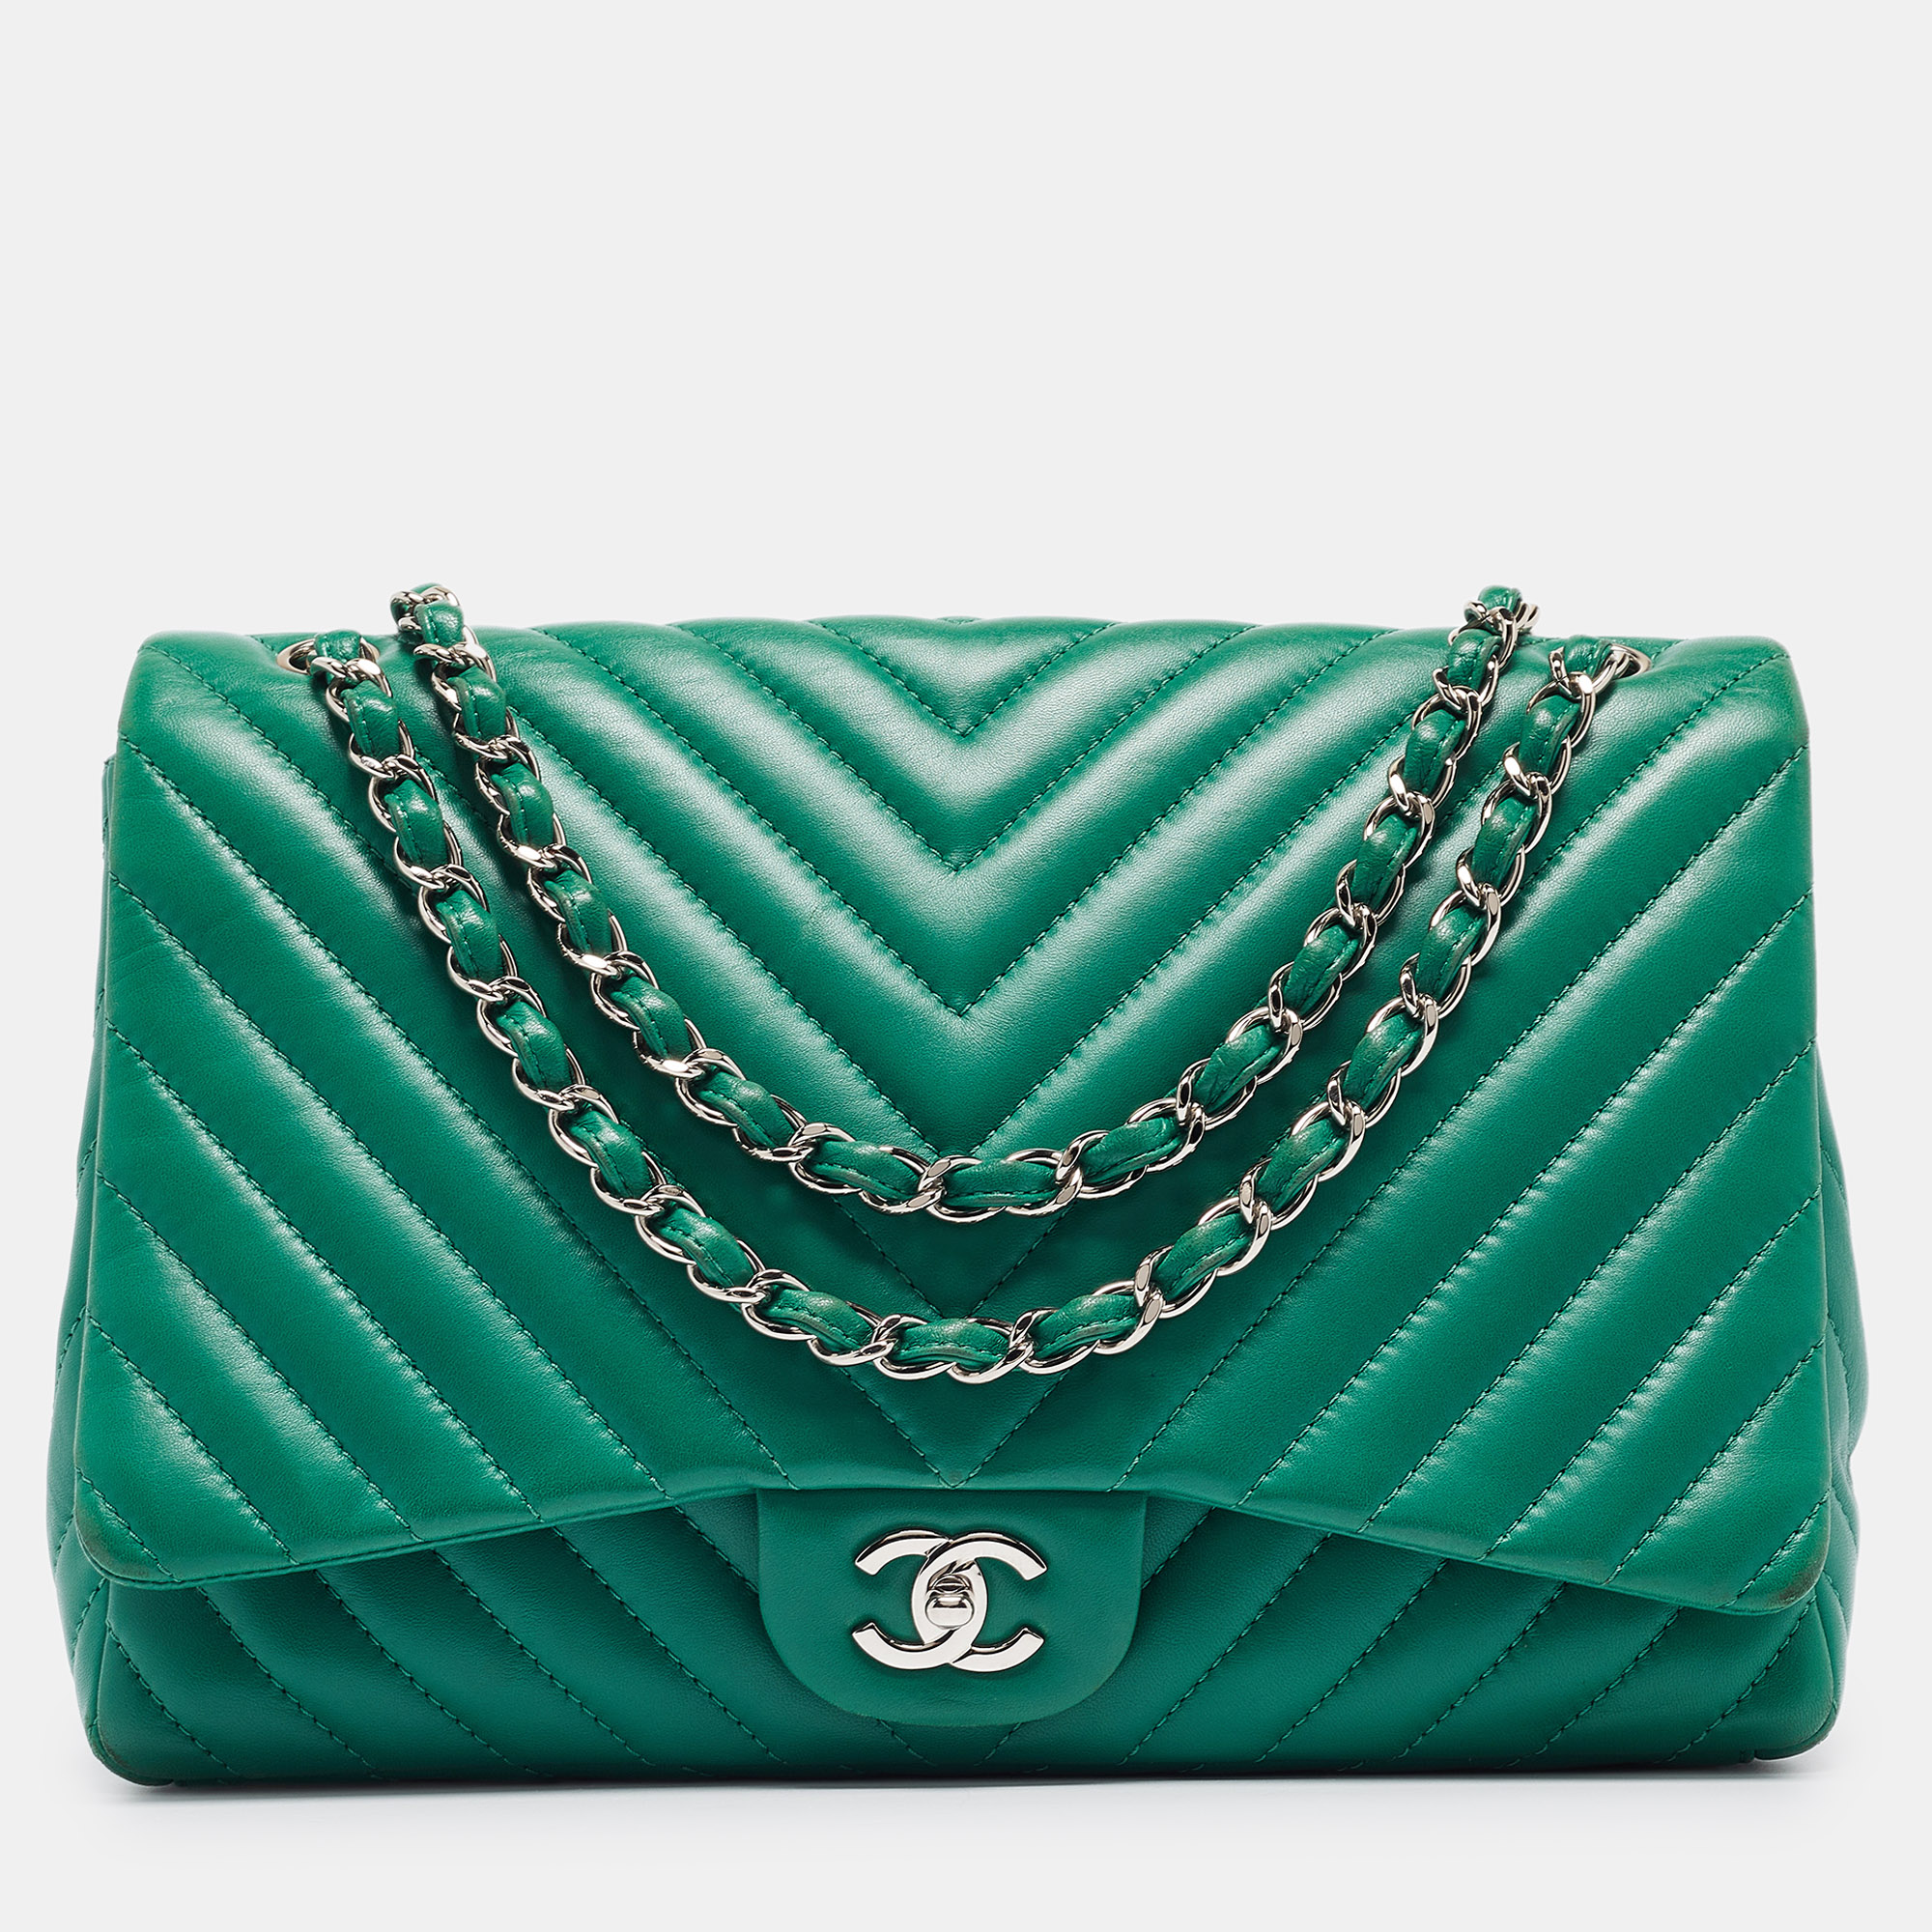 Chanel green chevron leather maxi classic single flap bag